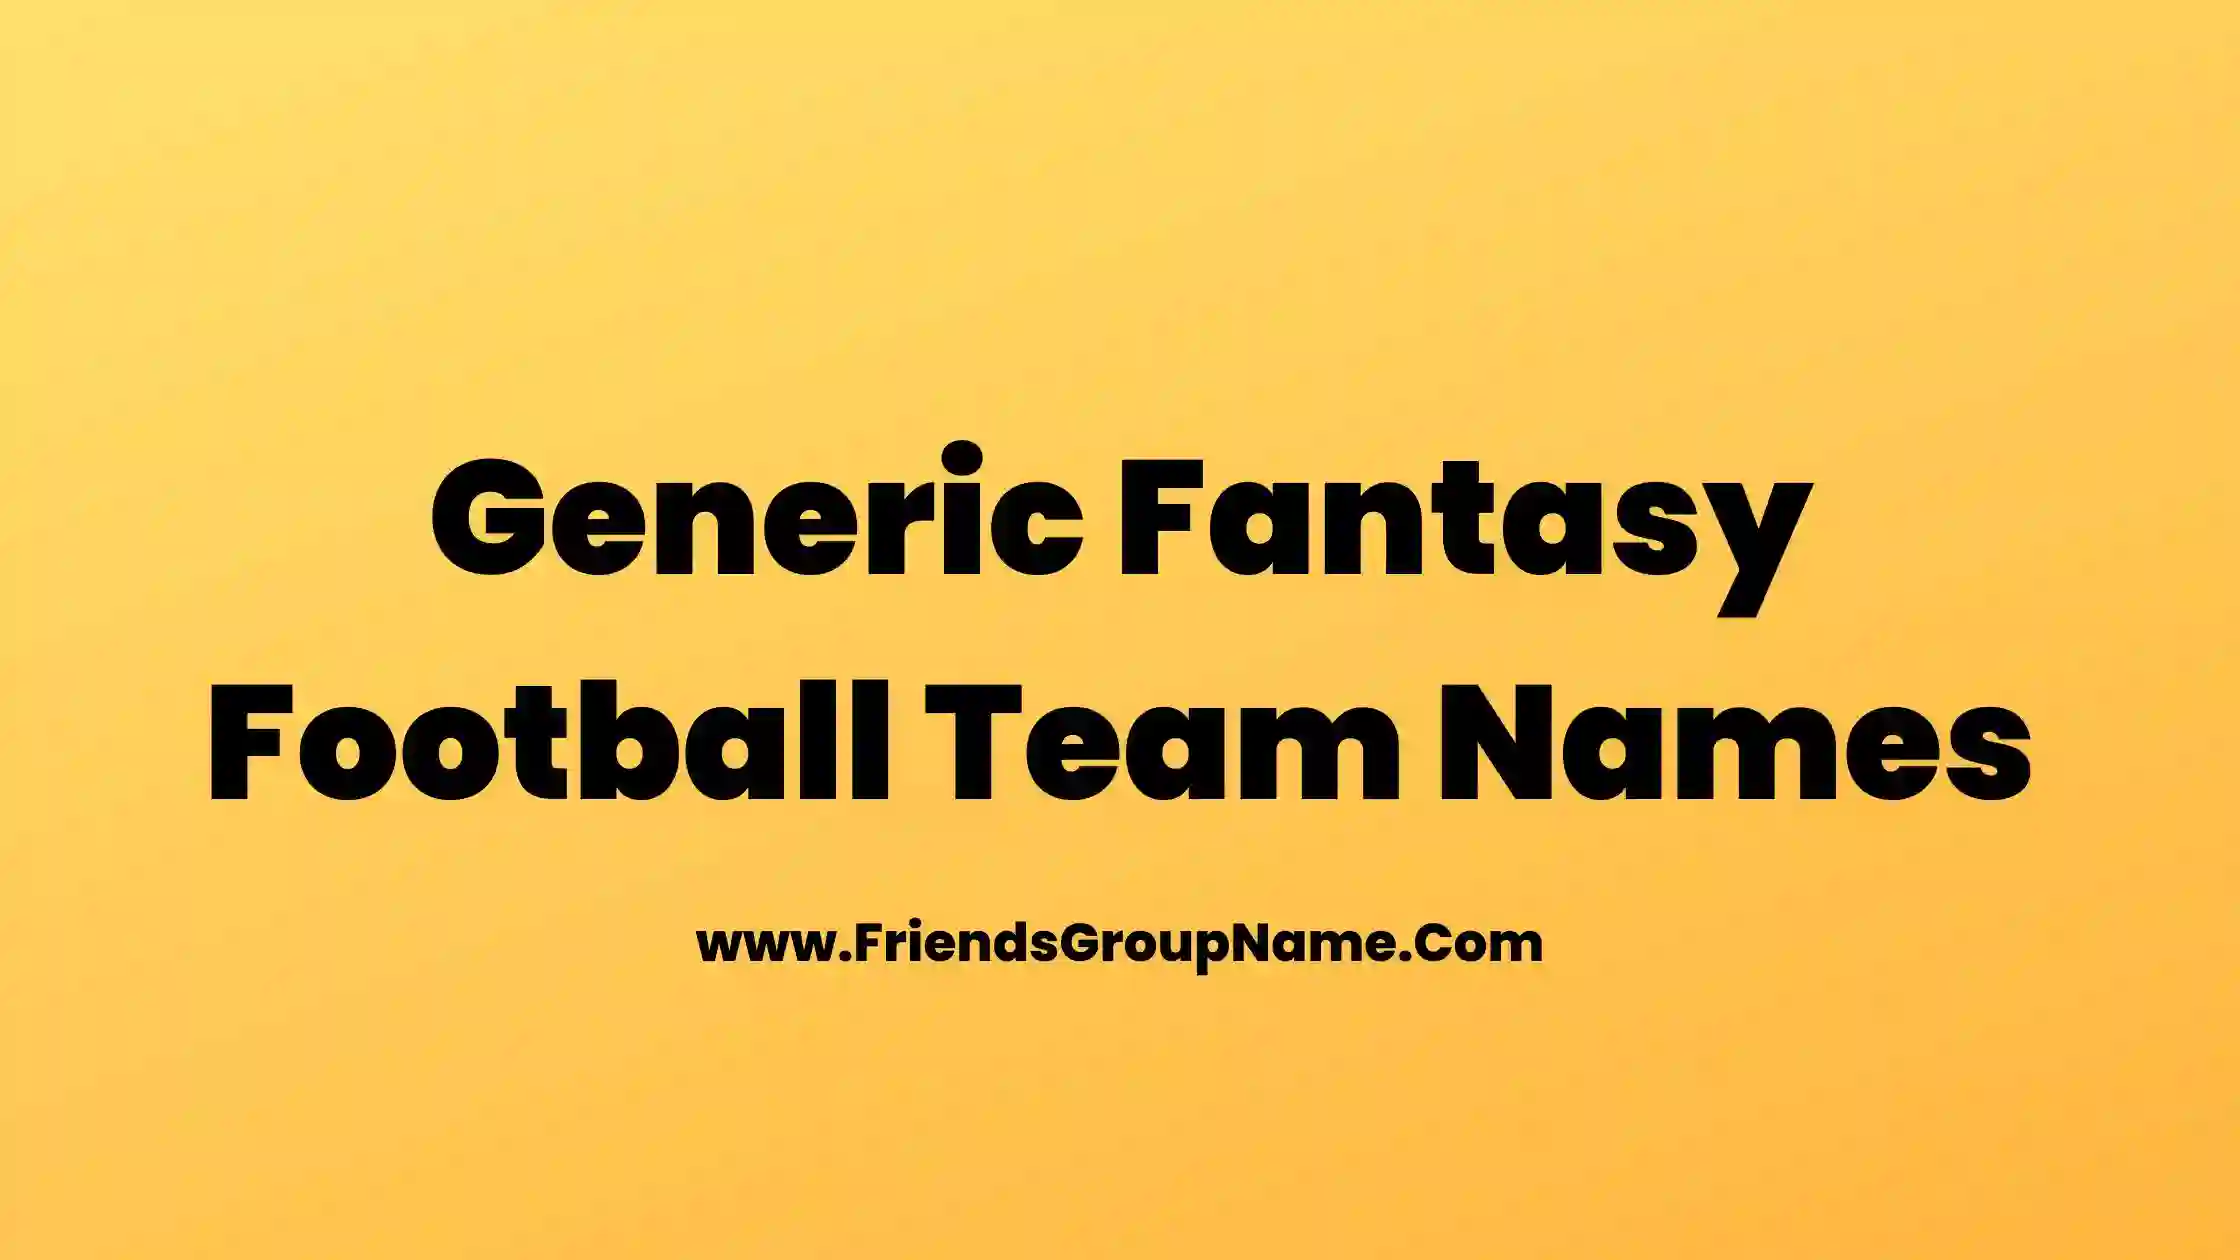 Generic Fantasy Football Team Names